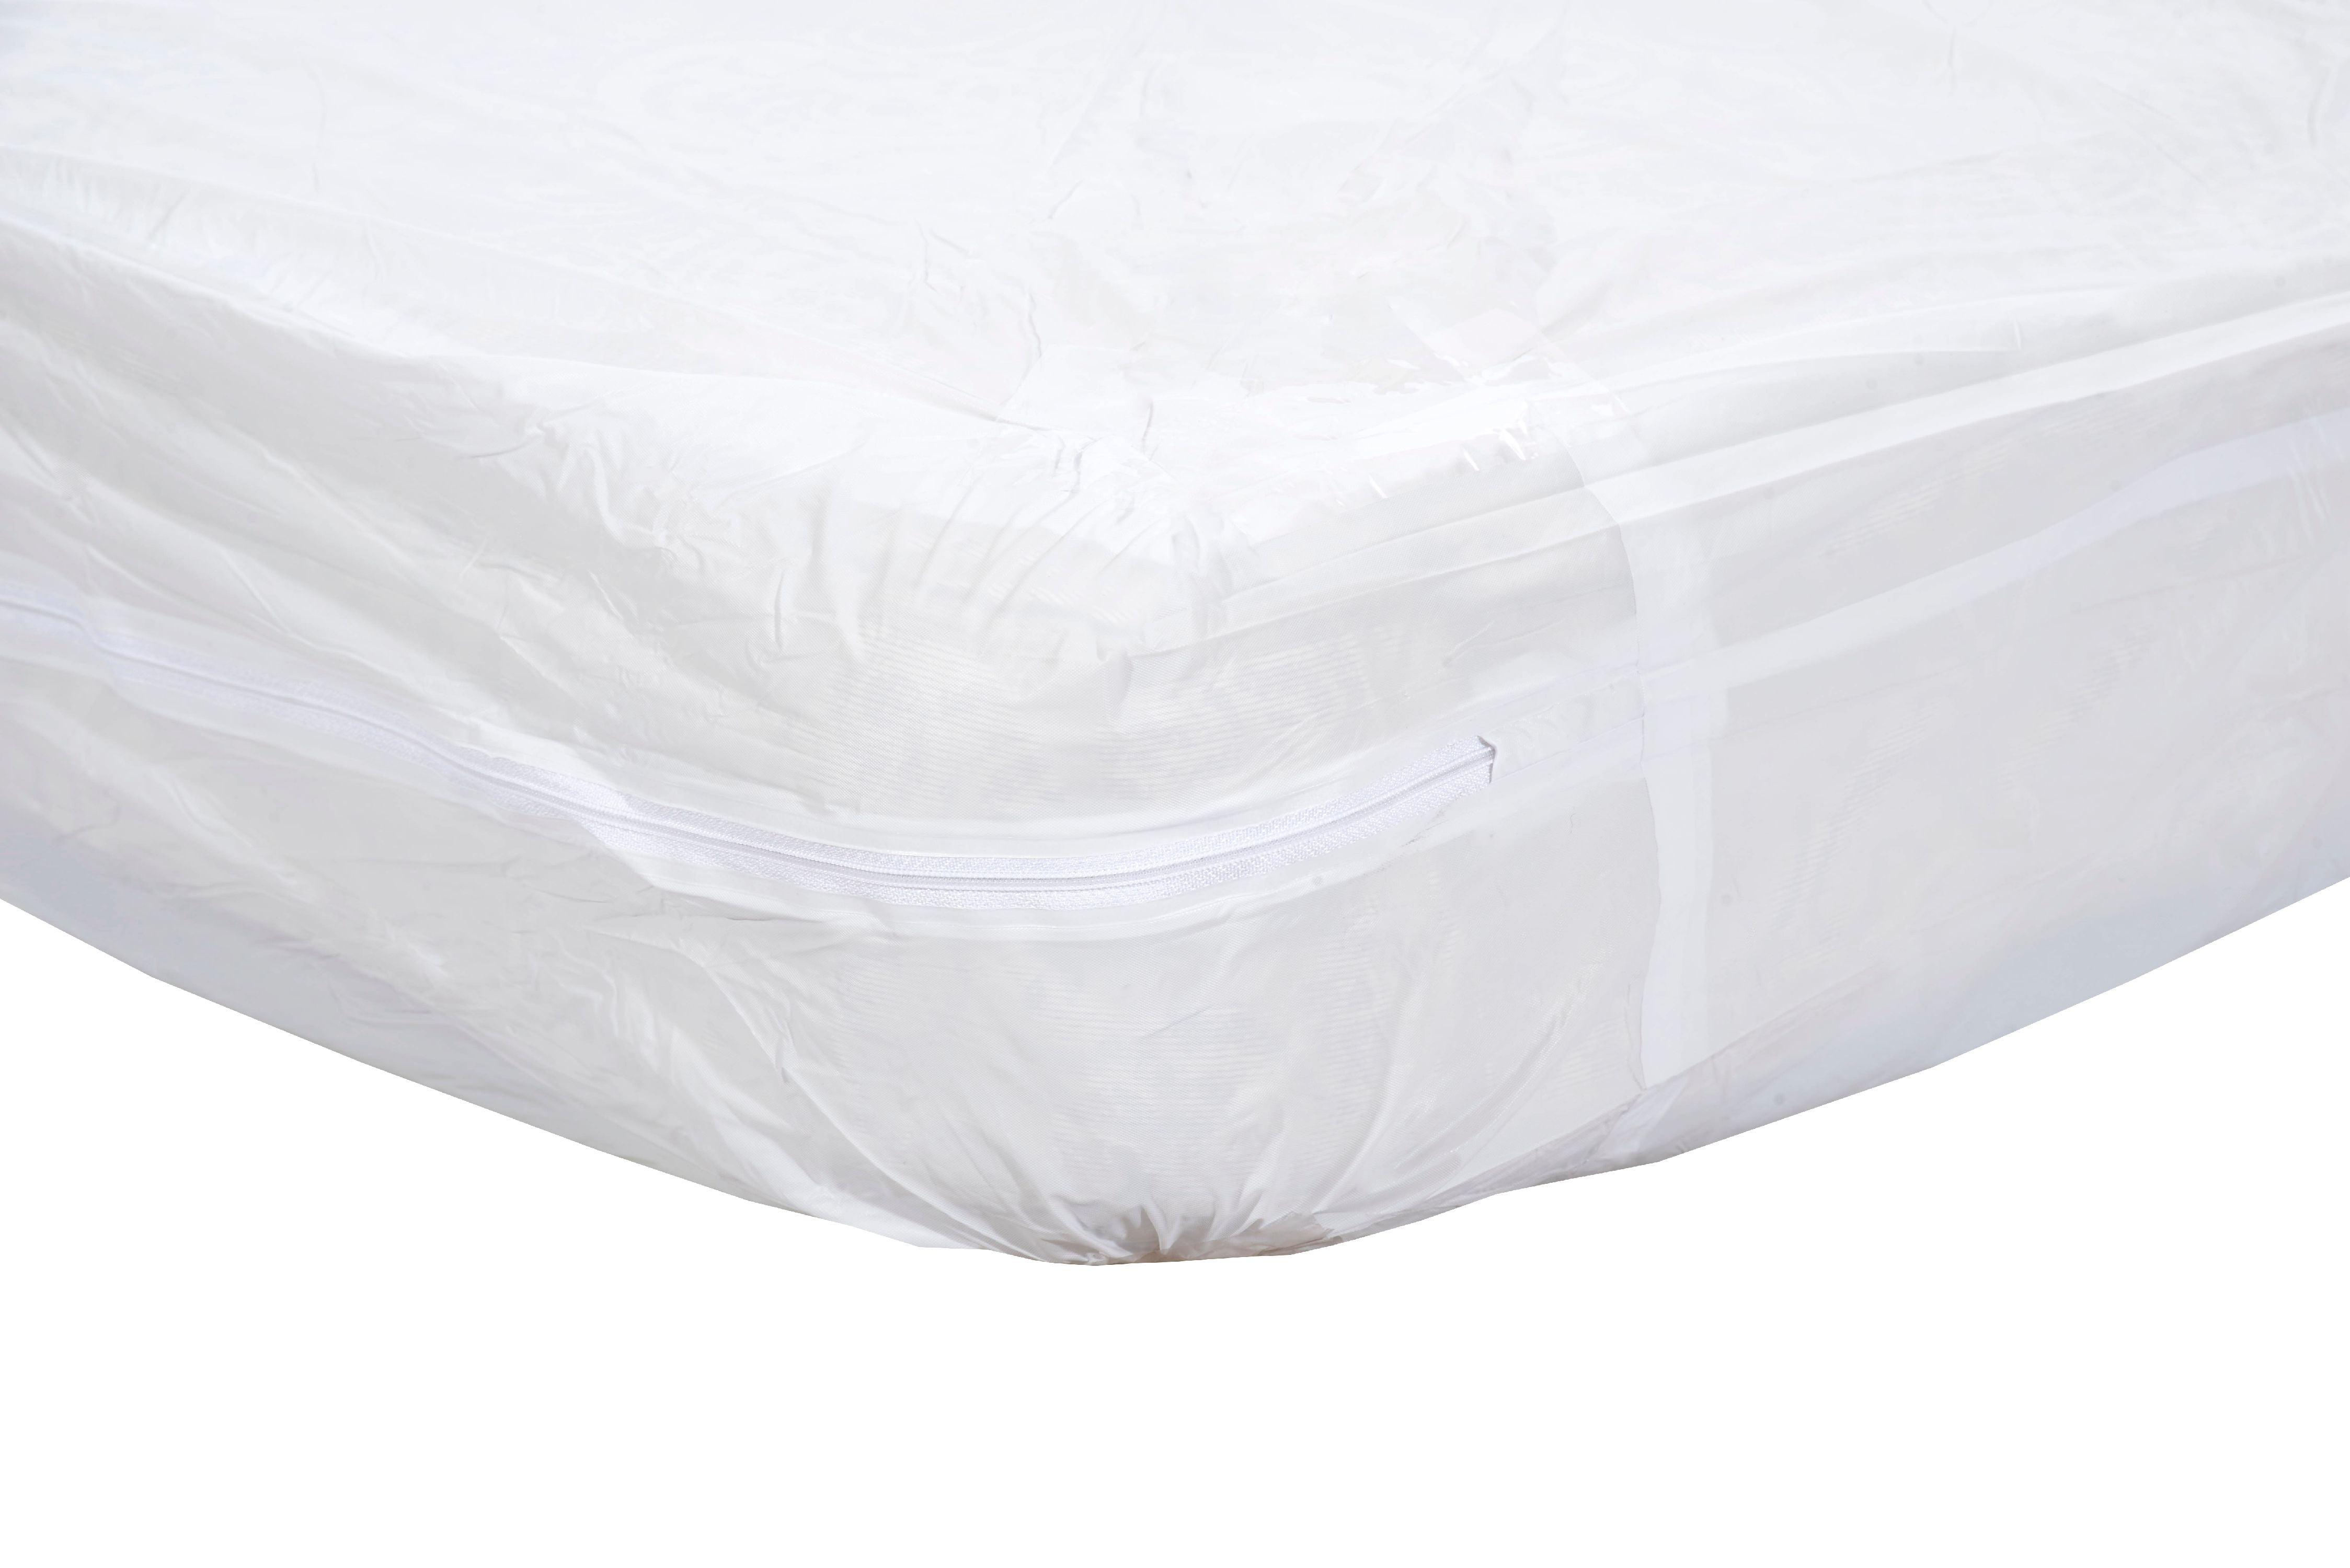 medical medical grade mattress protector fitted sheet